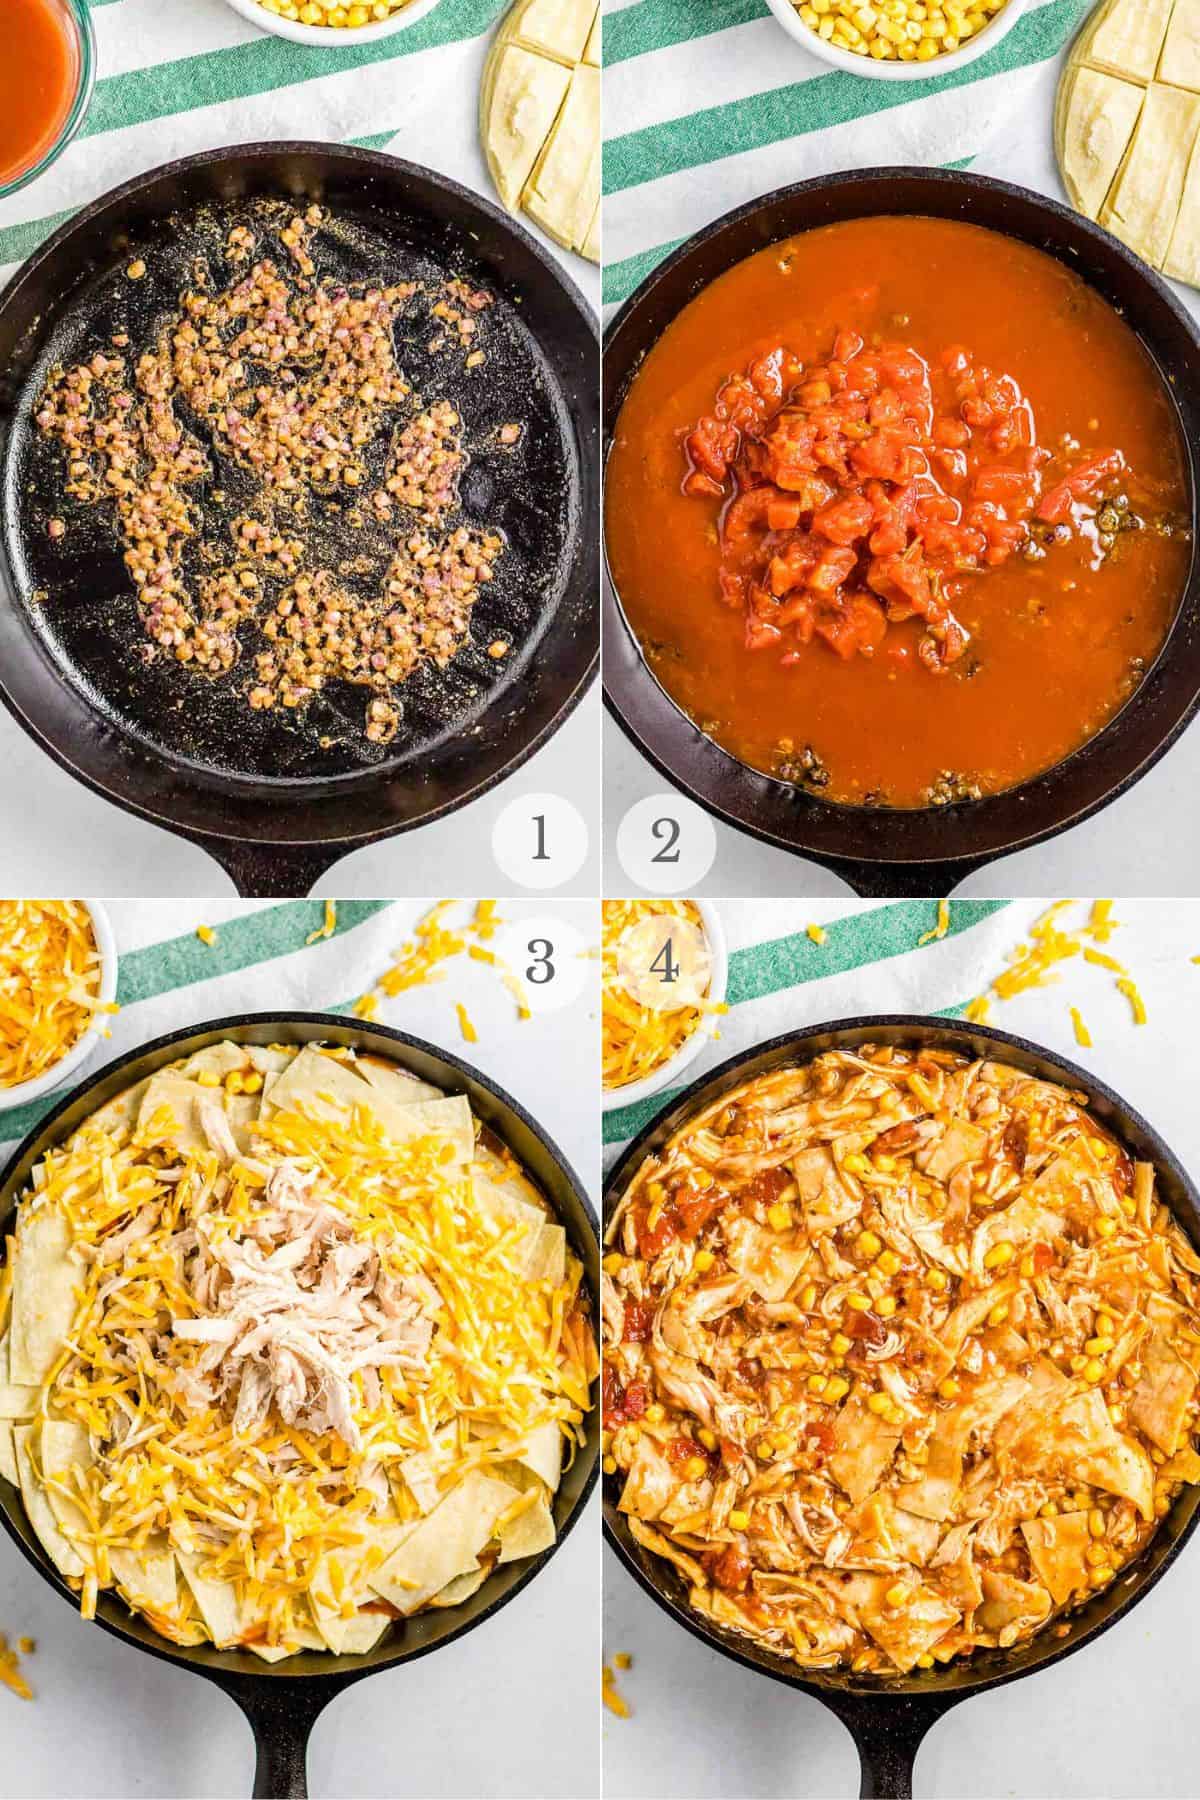 chicken enchilada skillet recipe steps 1-4.